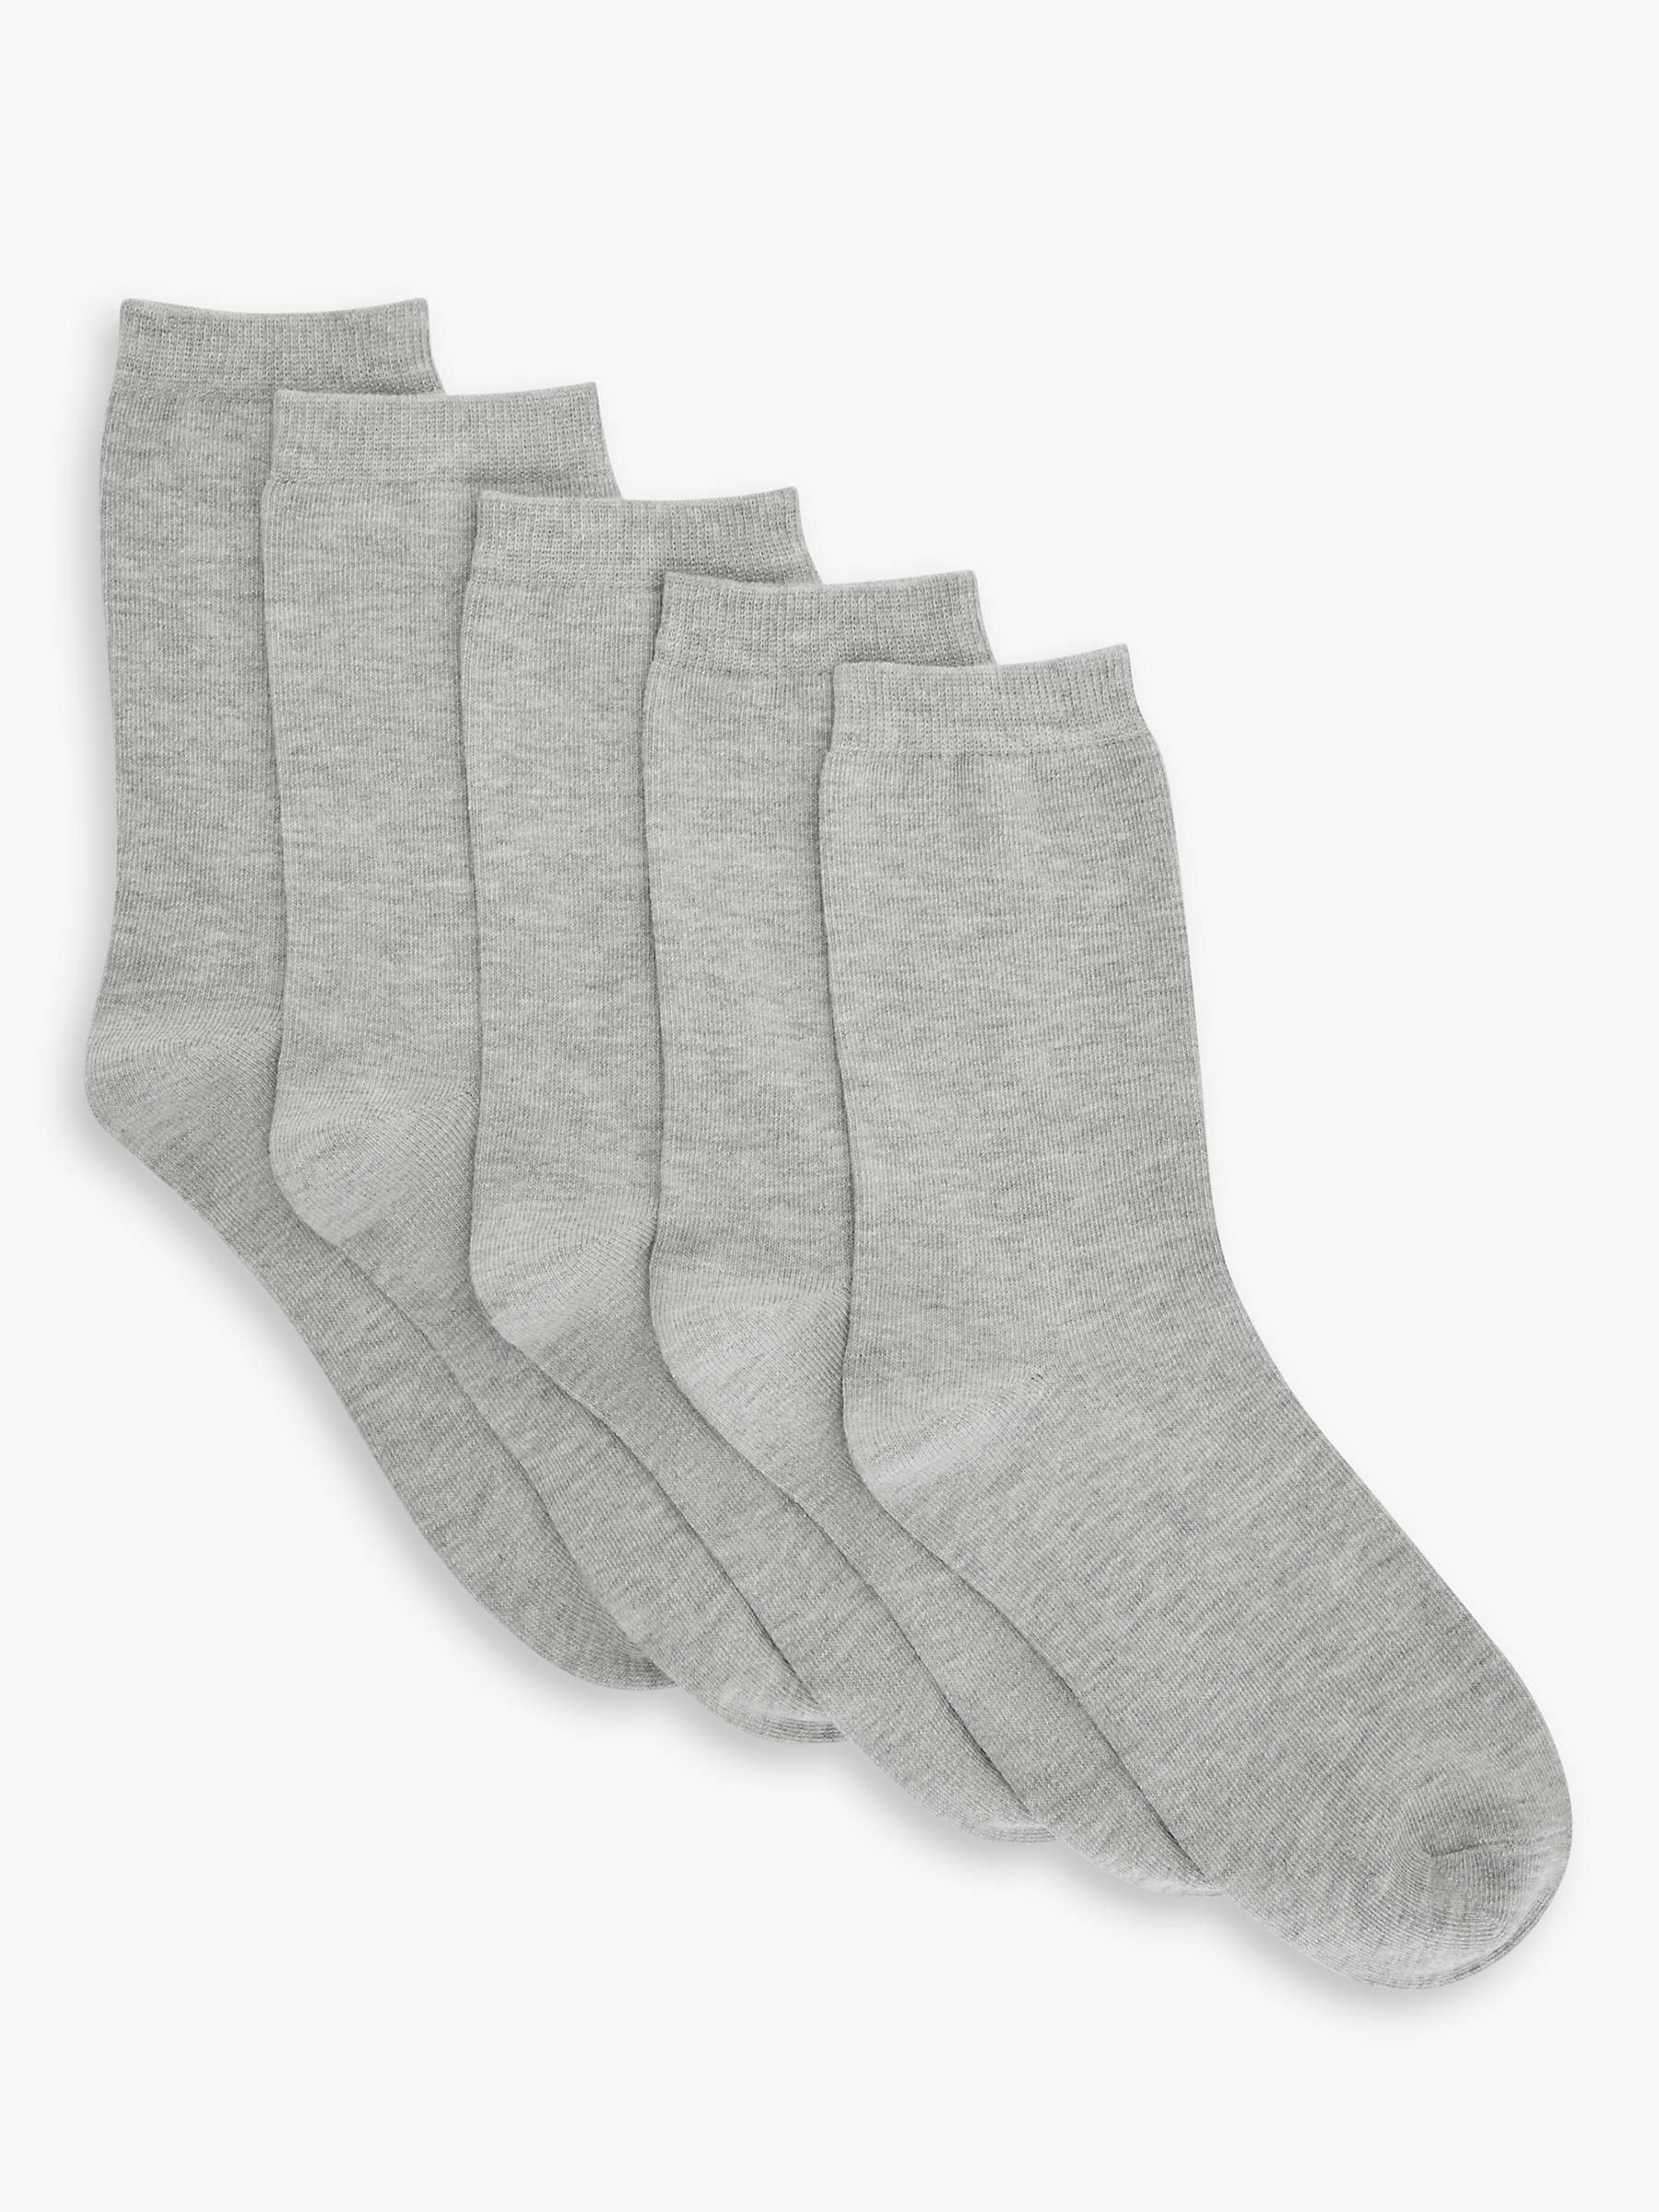 Buy John Lewis Ankle Socks, Pack of 5, Grey Online at johnlewis.com